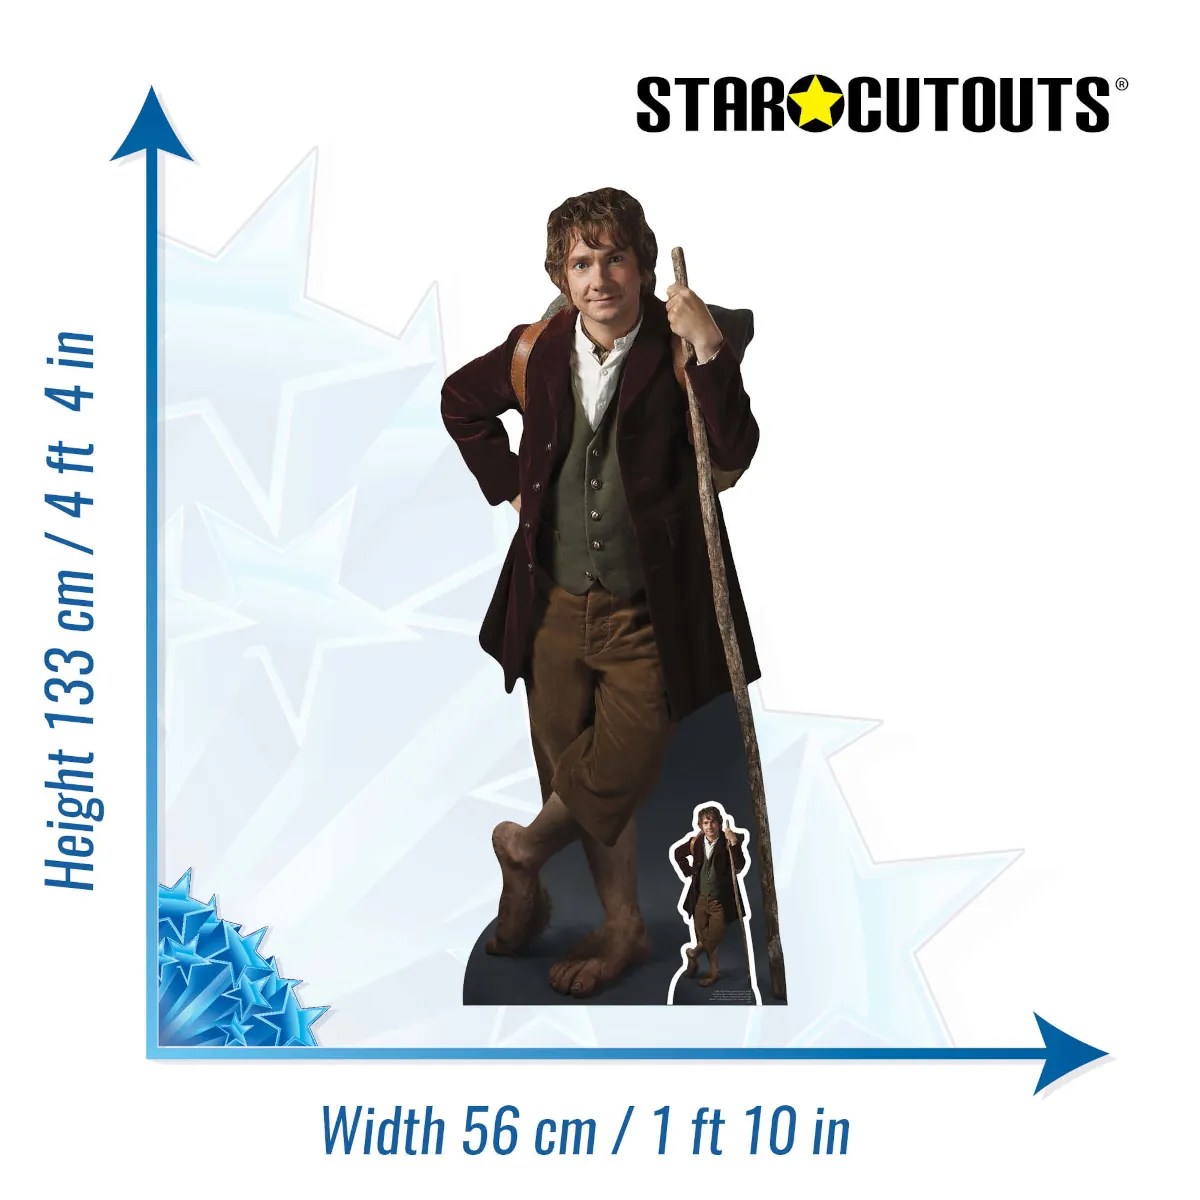 SC4138 Bilbo Baggins (The Hobbit) Official Lifesize + Mini Cardboard Cutout Standee Size